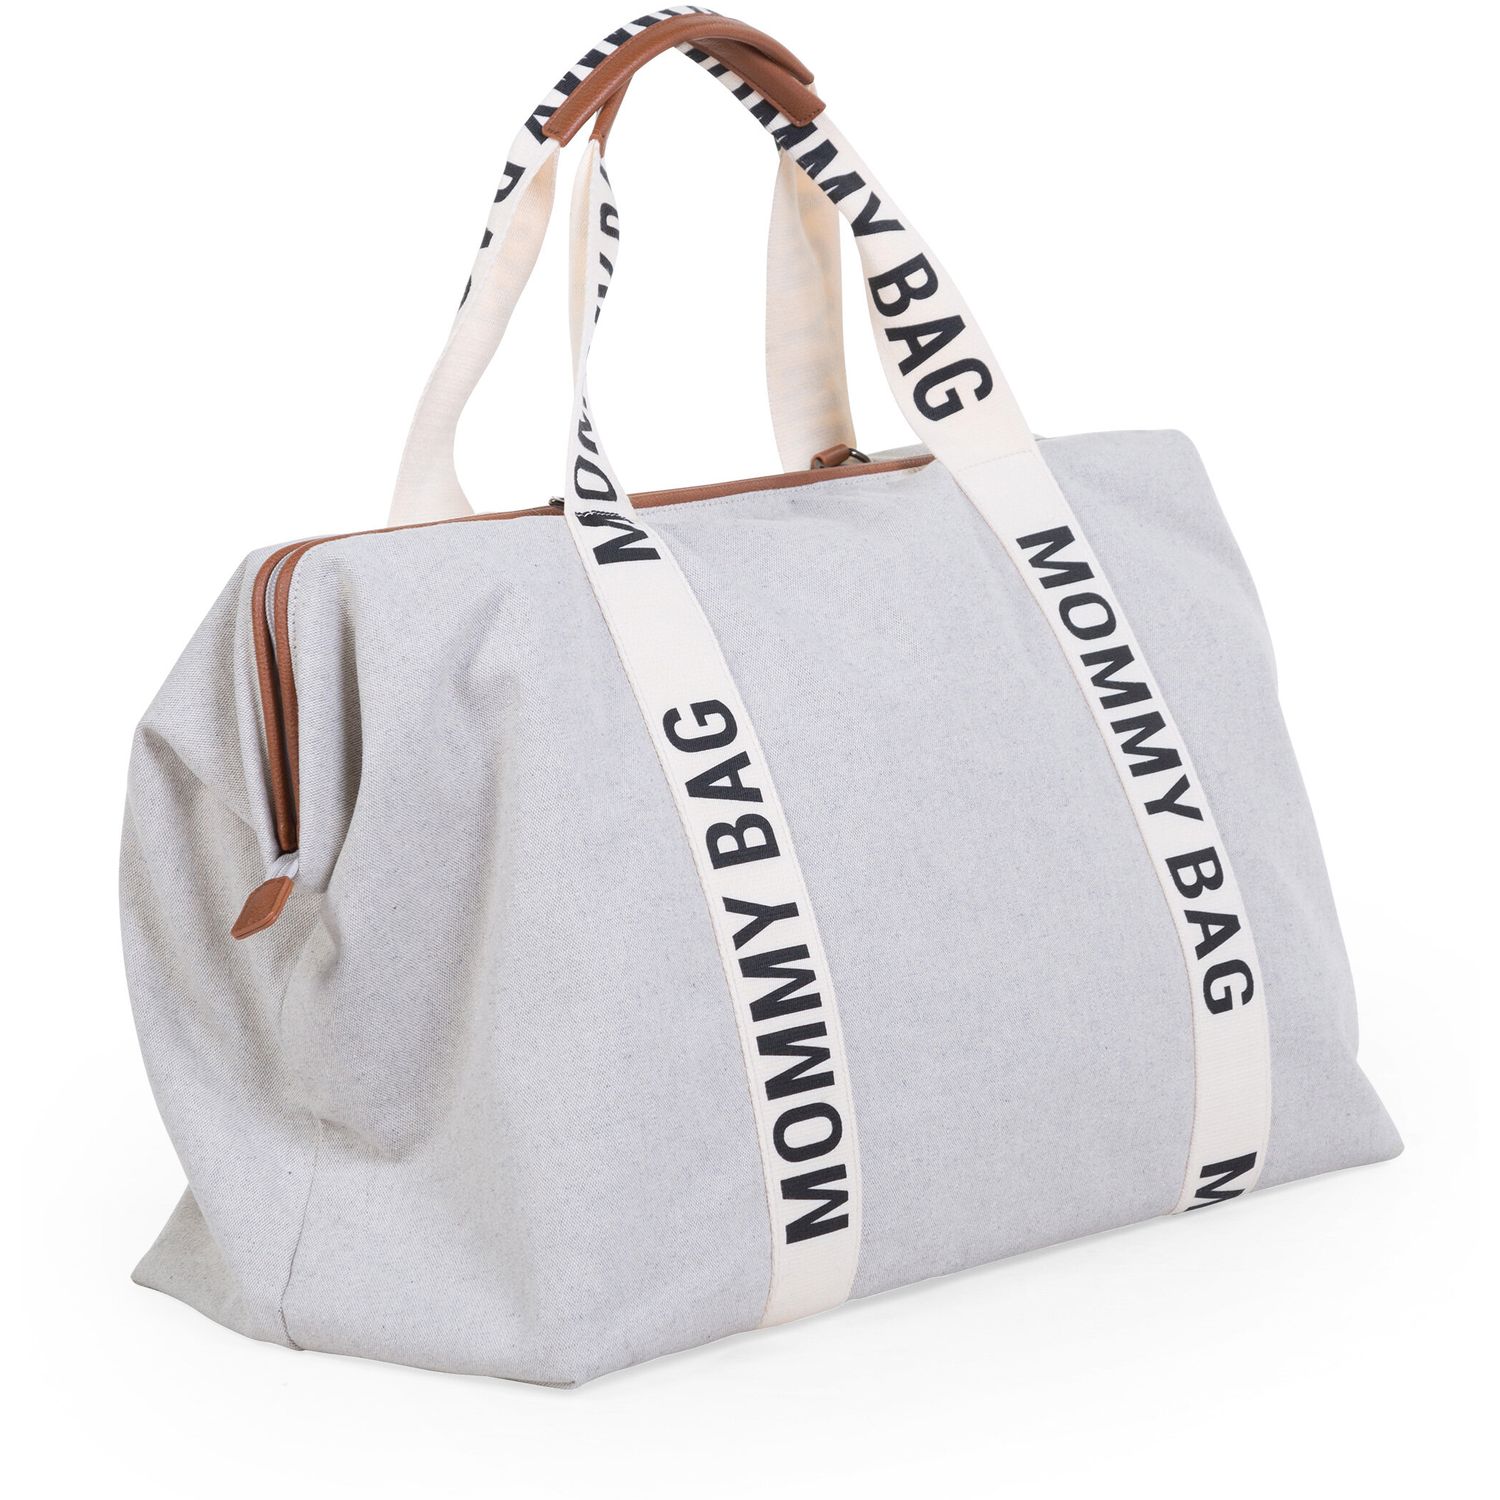 Сумка Childhome Mommy bag Signature - Canvas White, біла (CWMBBSCOW) - фото 2